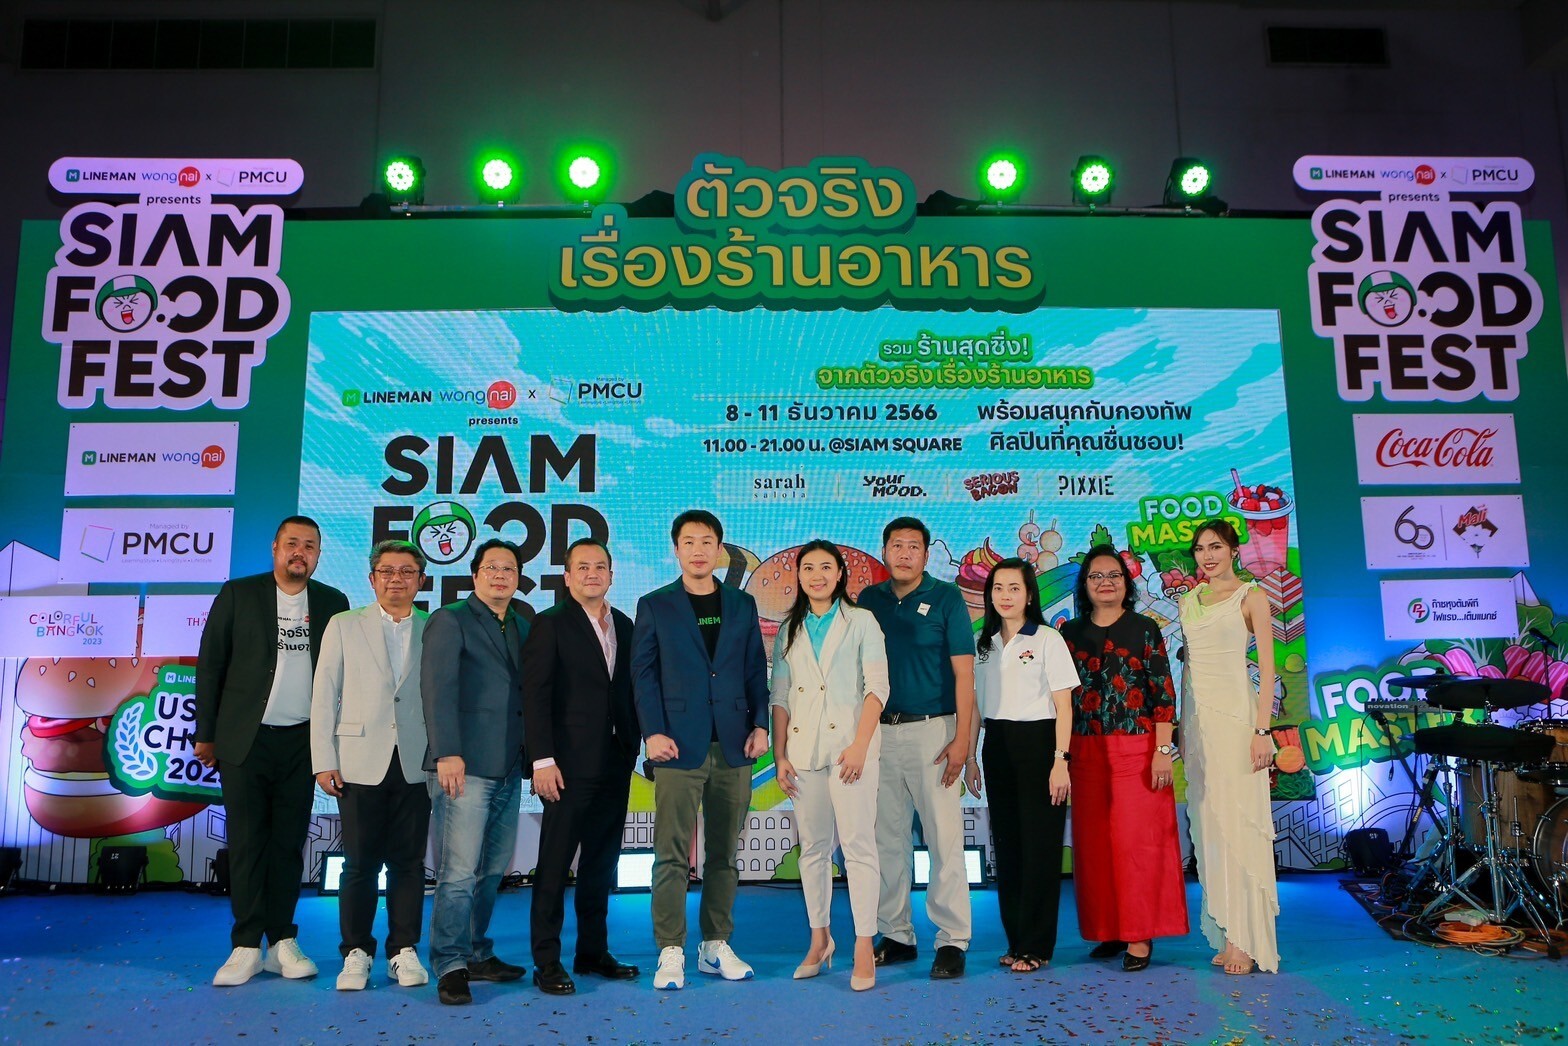 LINE MAN Wongnai ร่วมกับ PMCU เปิดงานเทศกาลอาหารแห่งปีใจกลางสยาม LINE MAN Wongnai x PMCU Presents "Siam Food Fest"